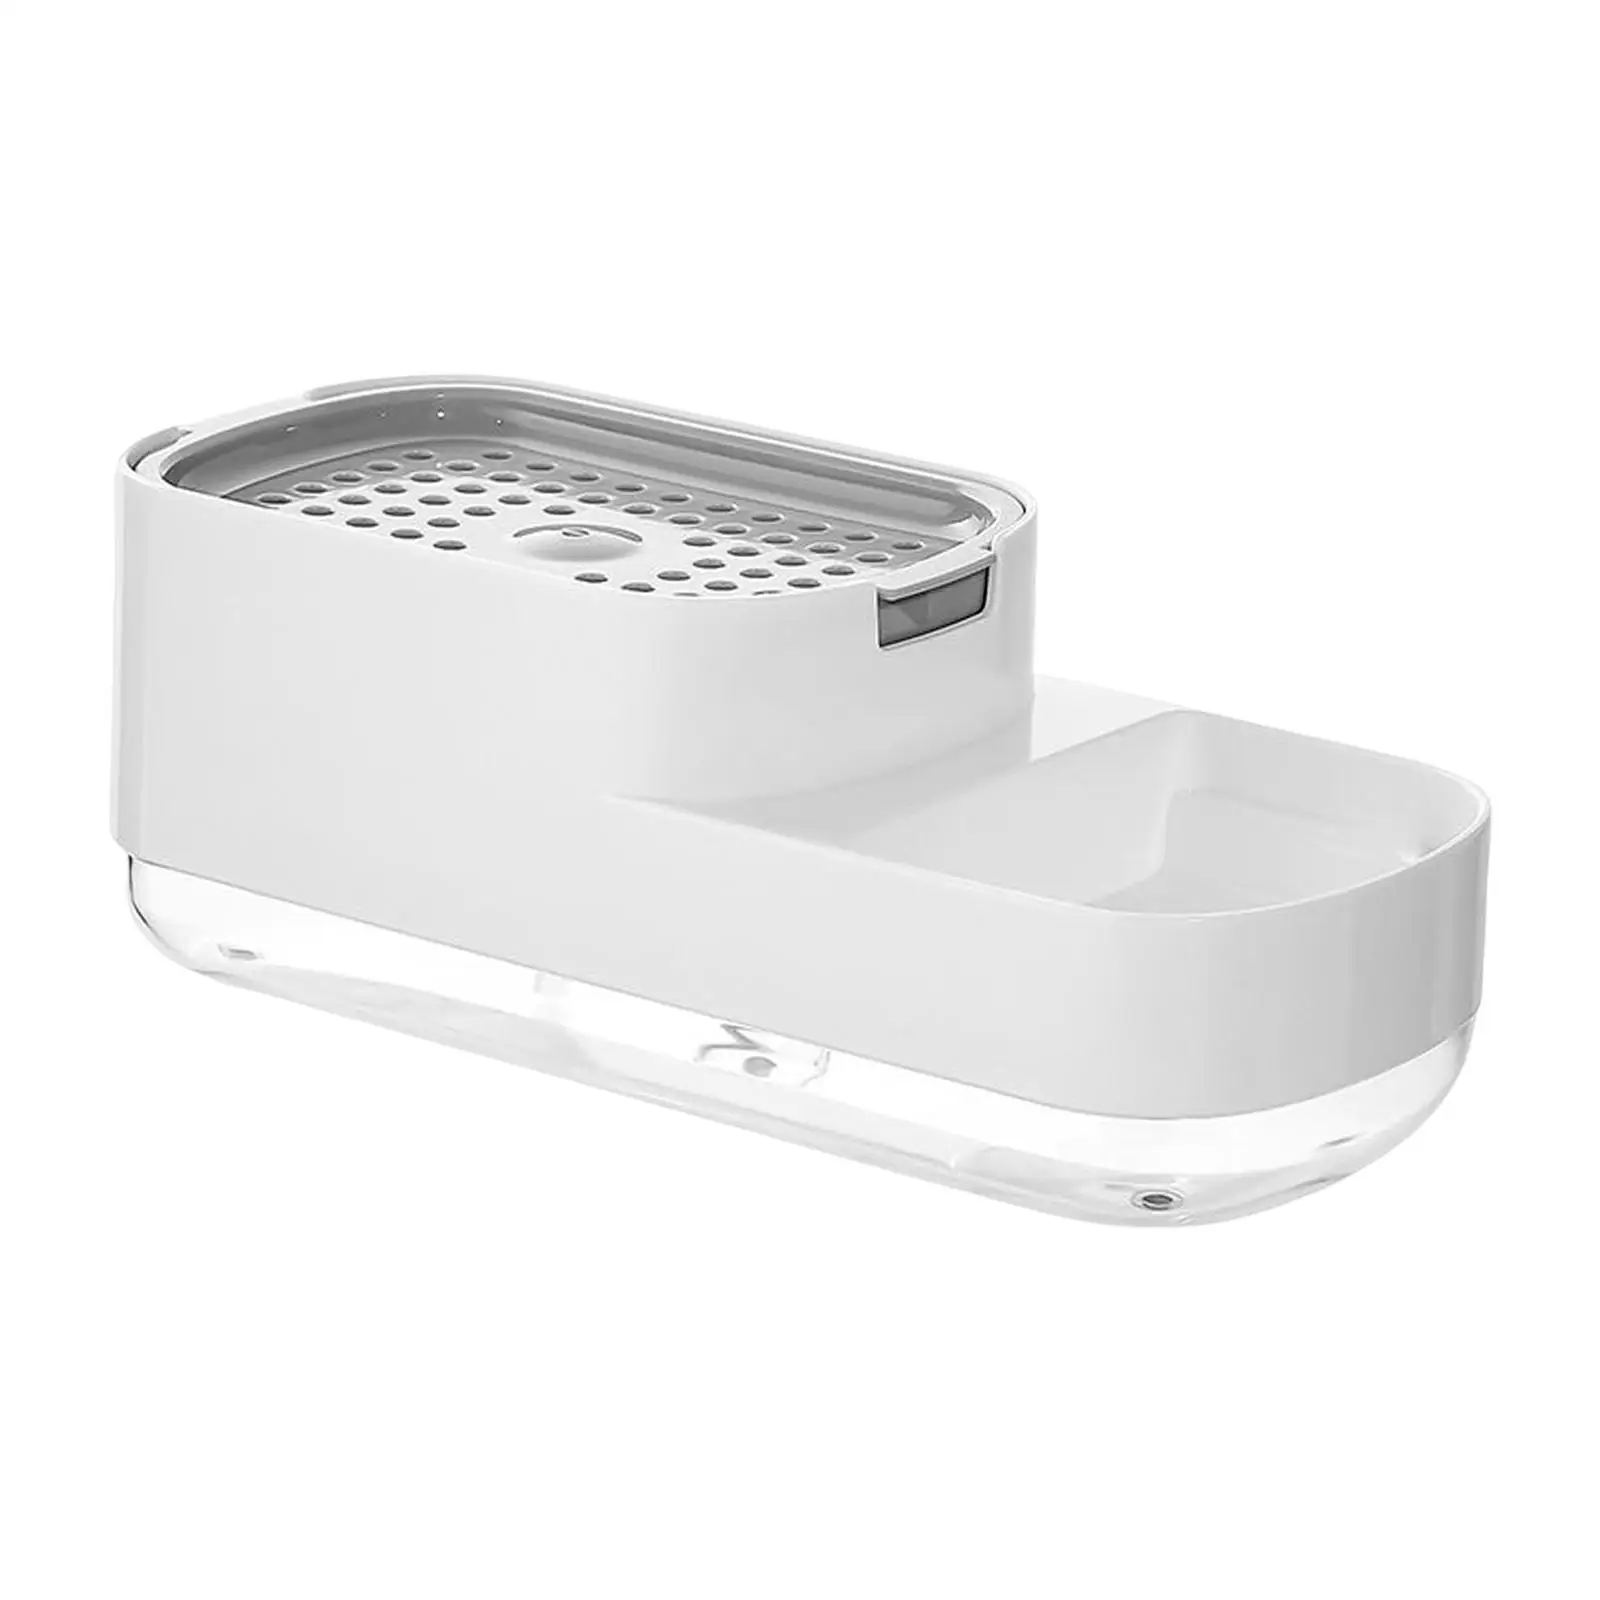 Dish Soap Dispenser Refillable Caddy Organizer Large Capacity for Bathroom